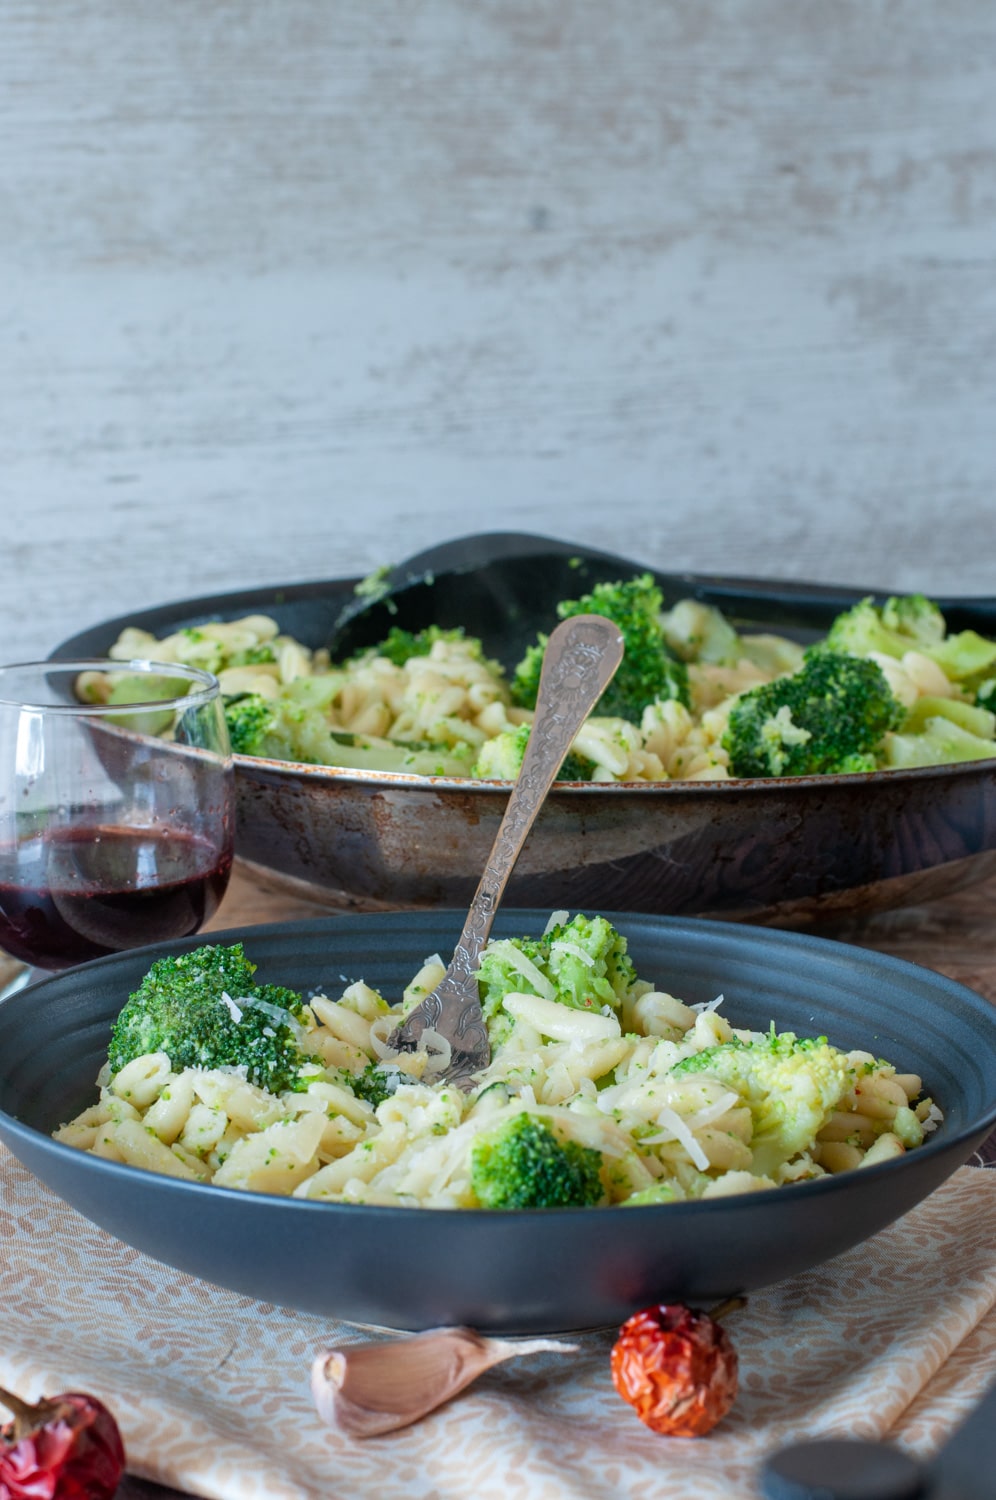 Cavatelli and broccoli served on a dish 